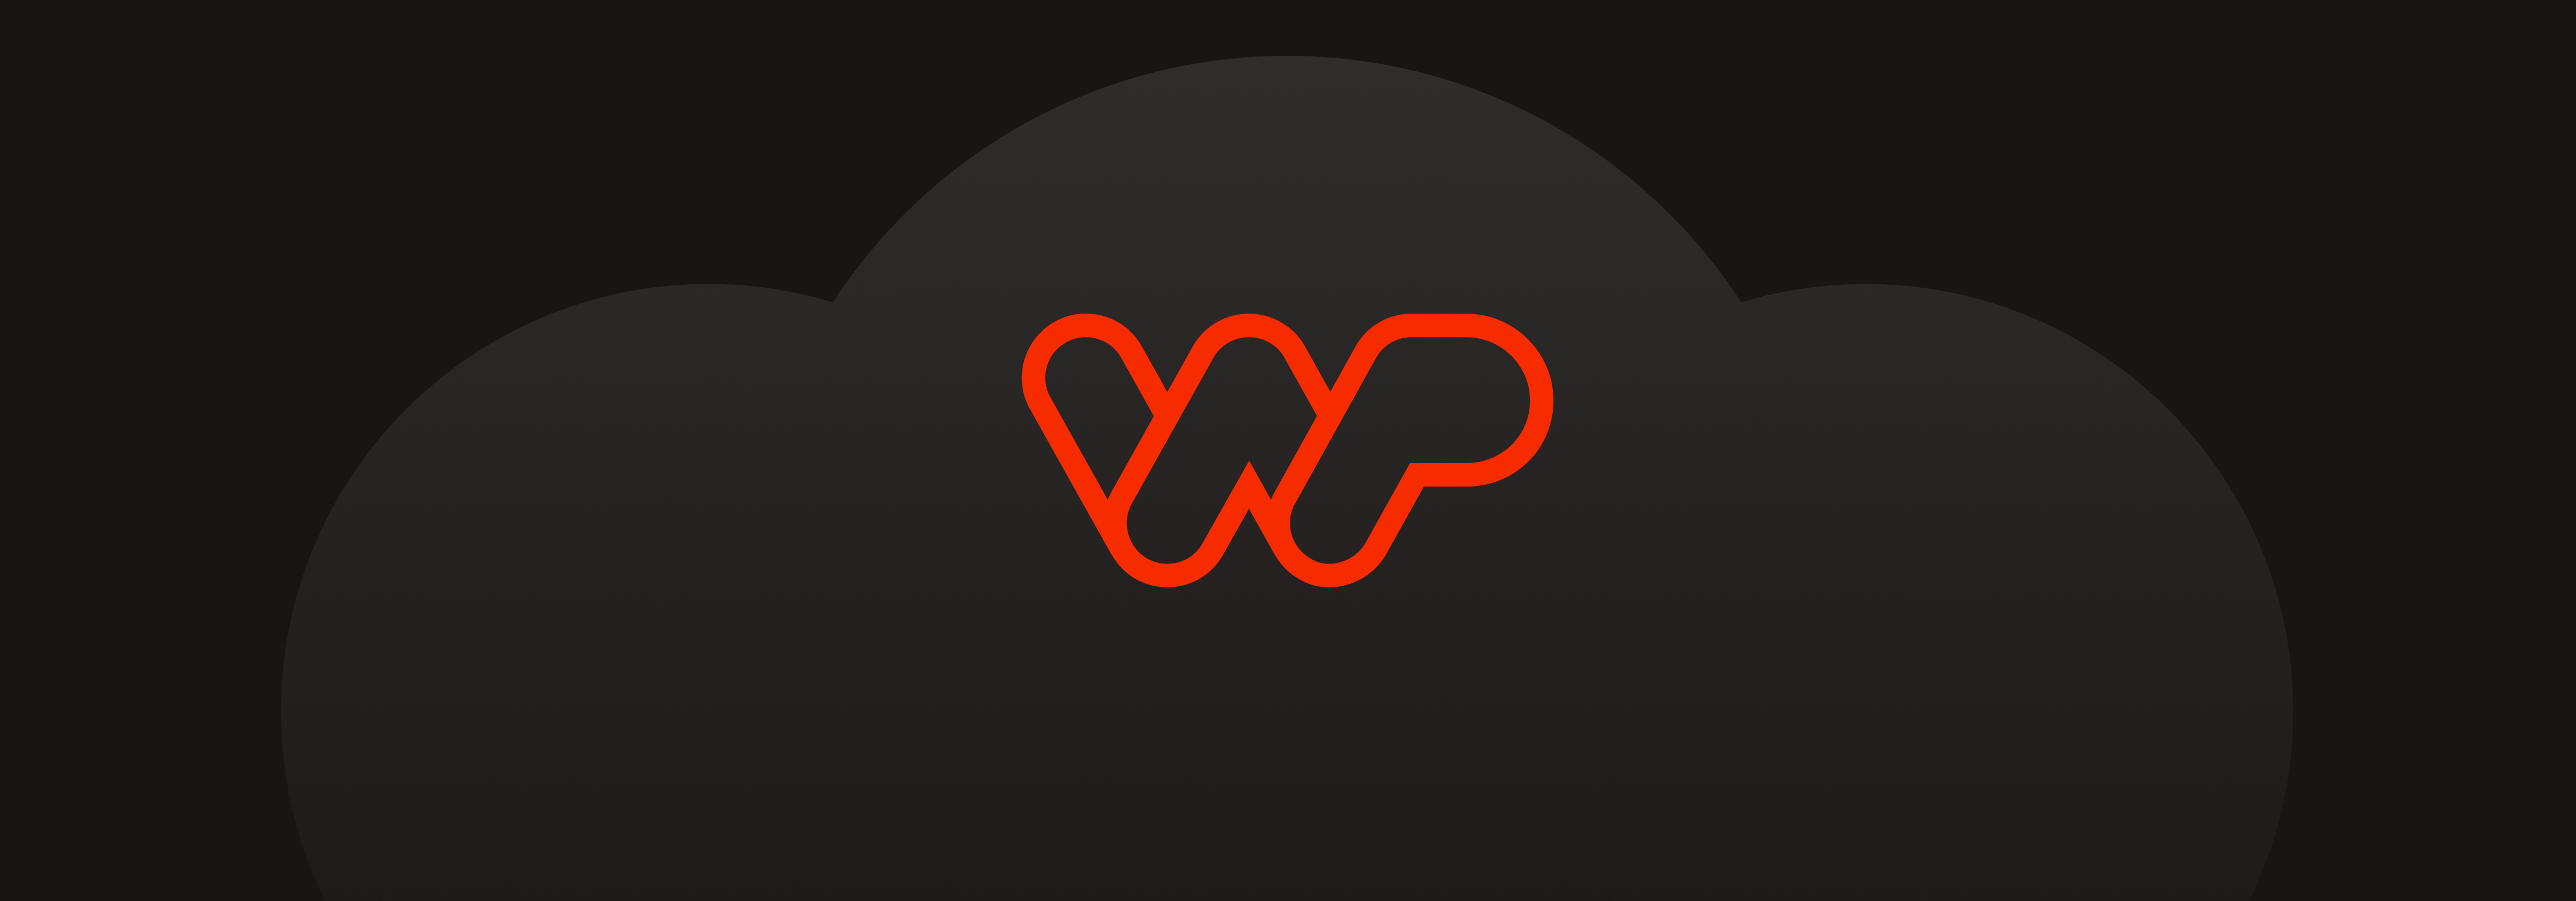 WP Cloud Is Powering the Future of WordPress